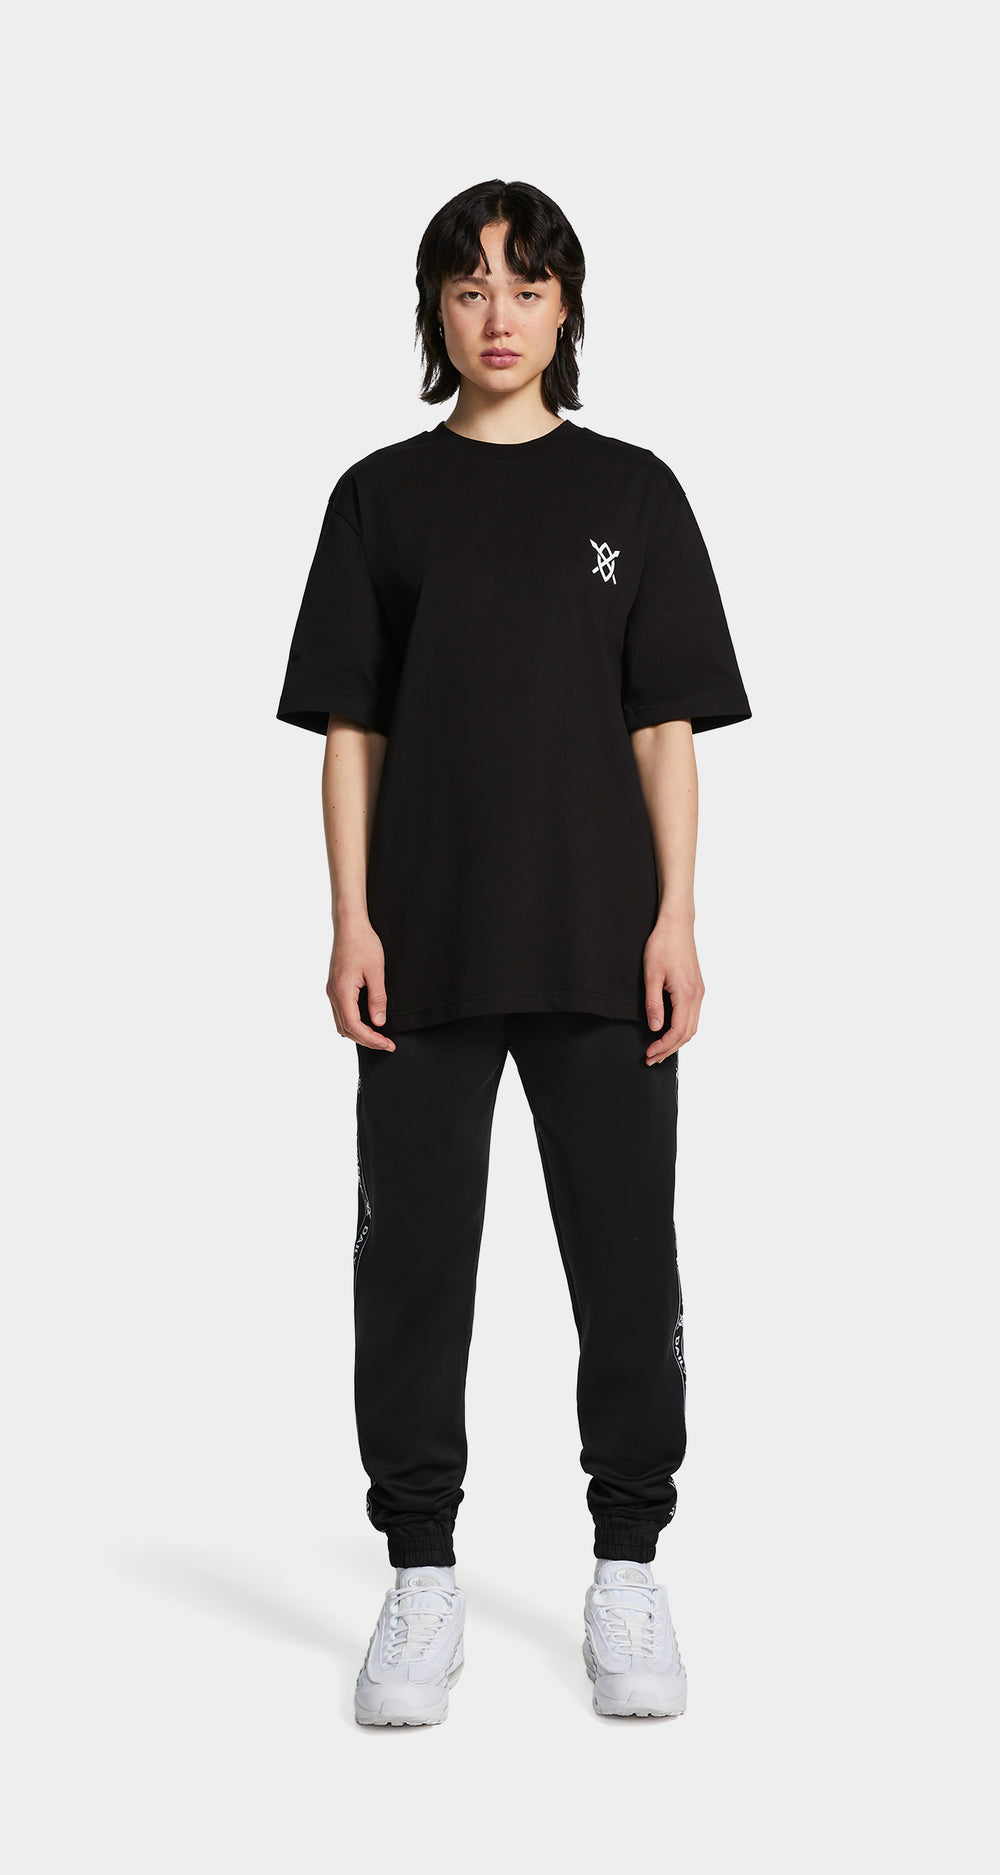 DP - Black NY Store T-Shirt - Wmn - Front